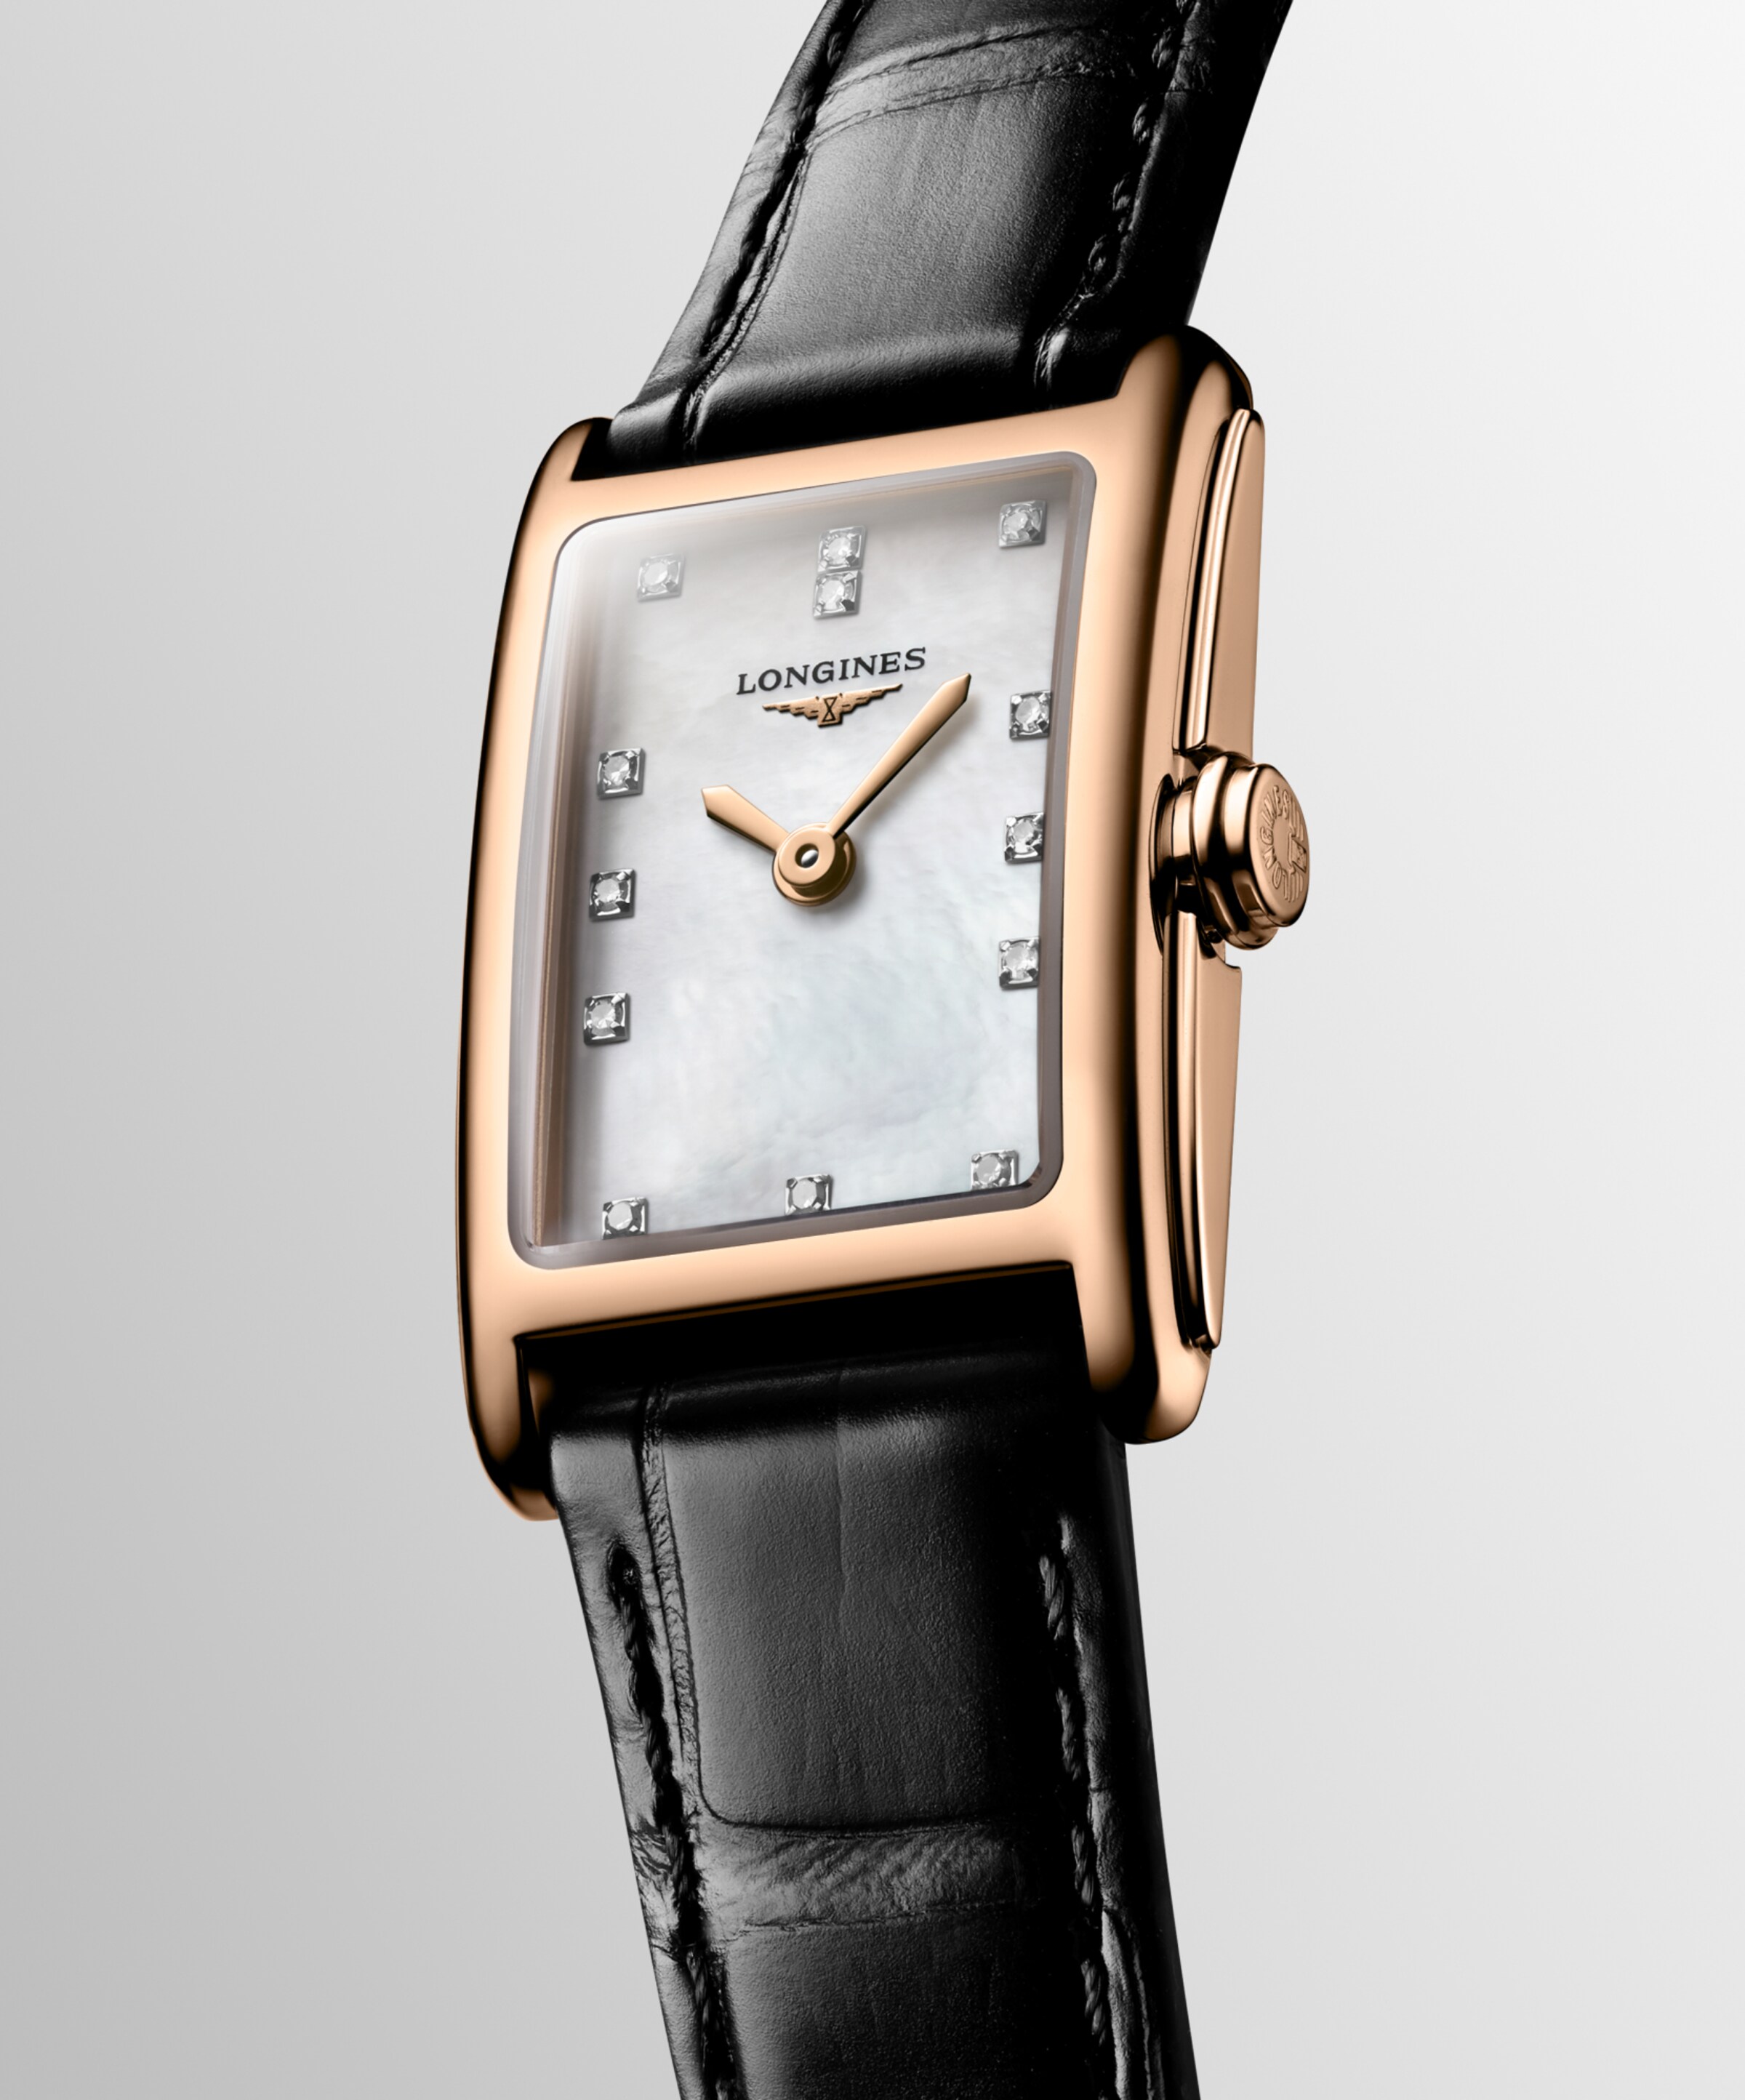 Longines DOLCEVITA Quartz 18 karat pink gold Watch - L5.258.8.87.0